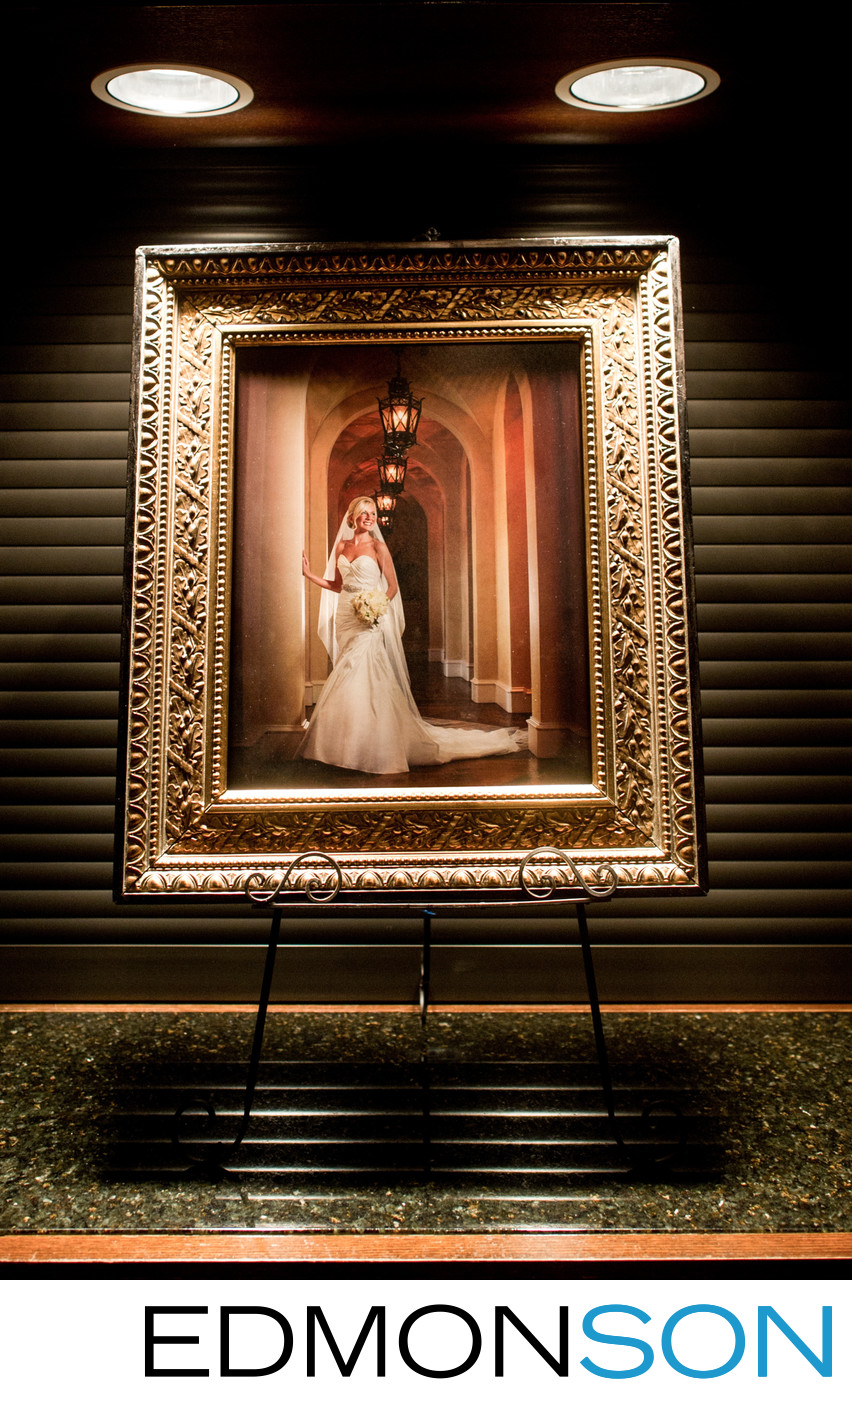 Bridal Portrait On Display At Dallas Wedding Reception